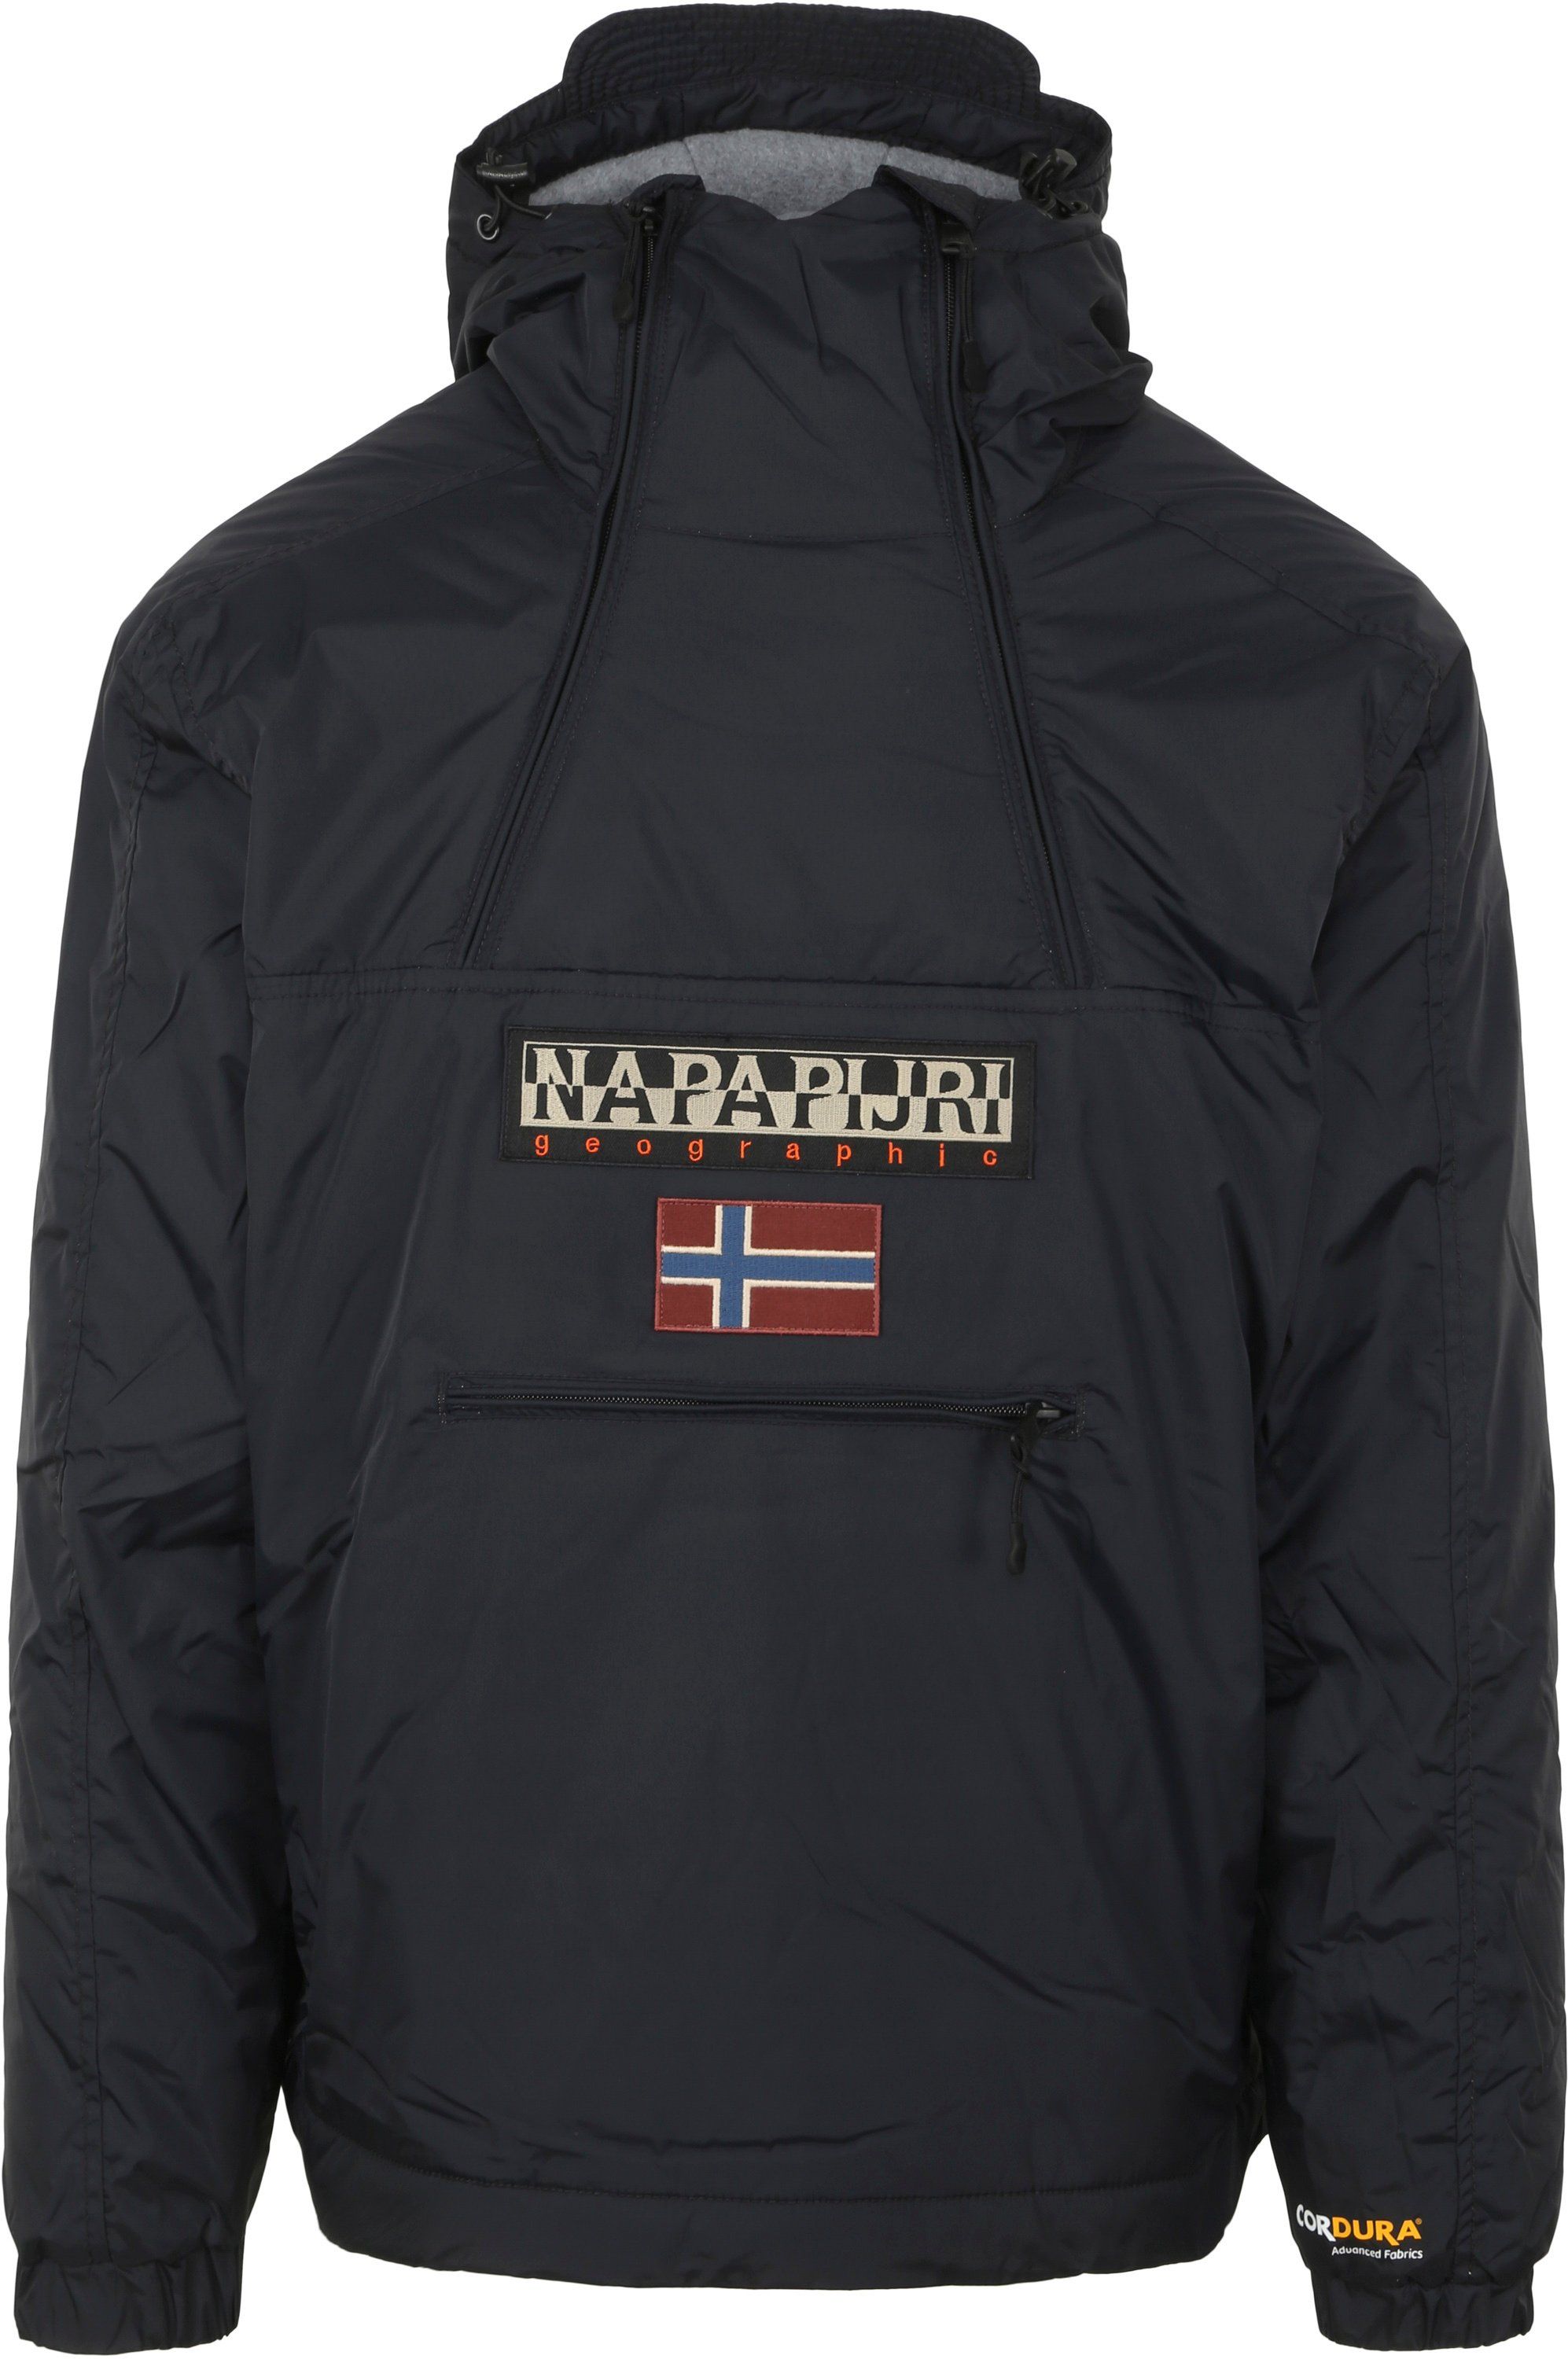 Napapijri Northfarer Jacket Black size L